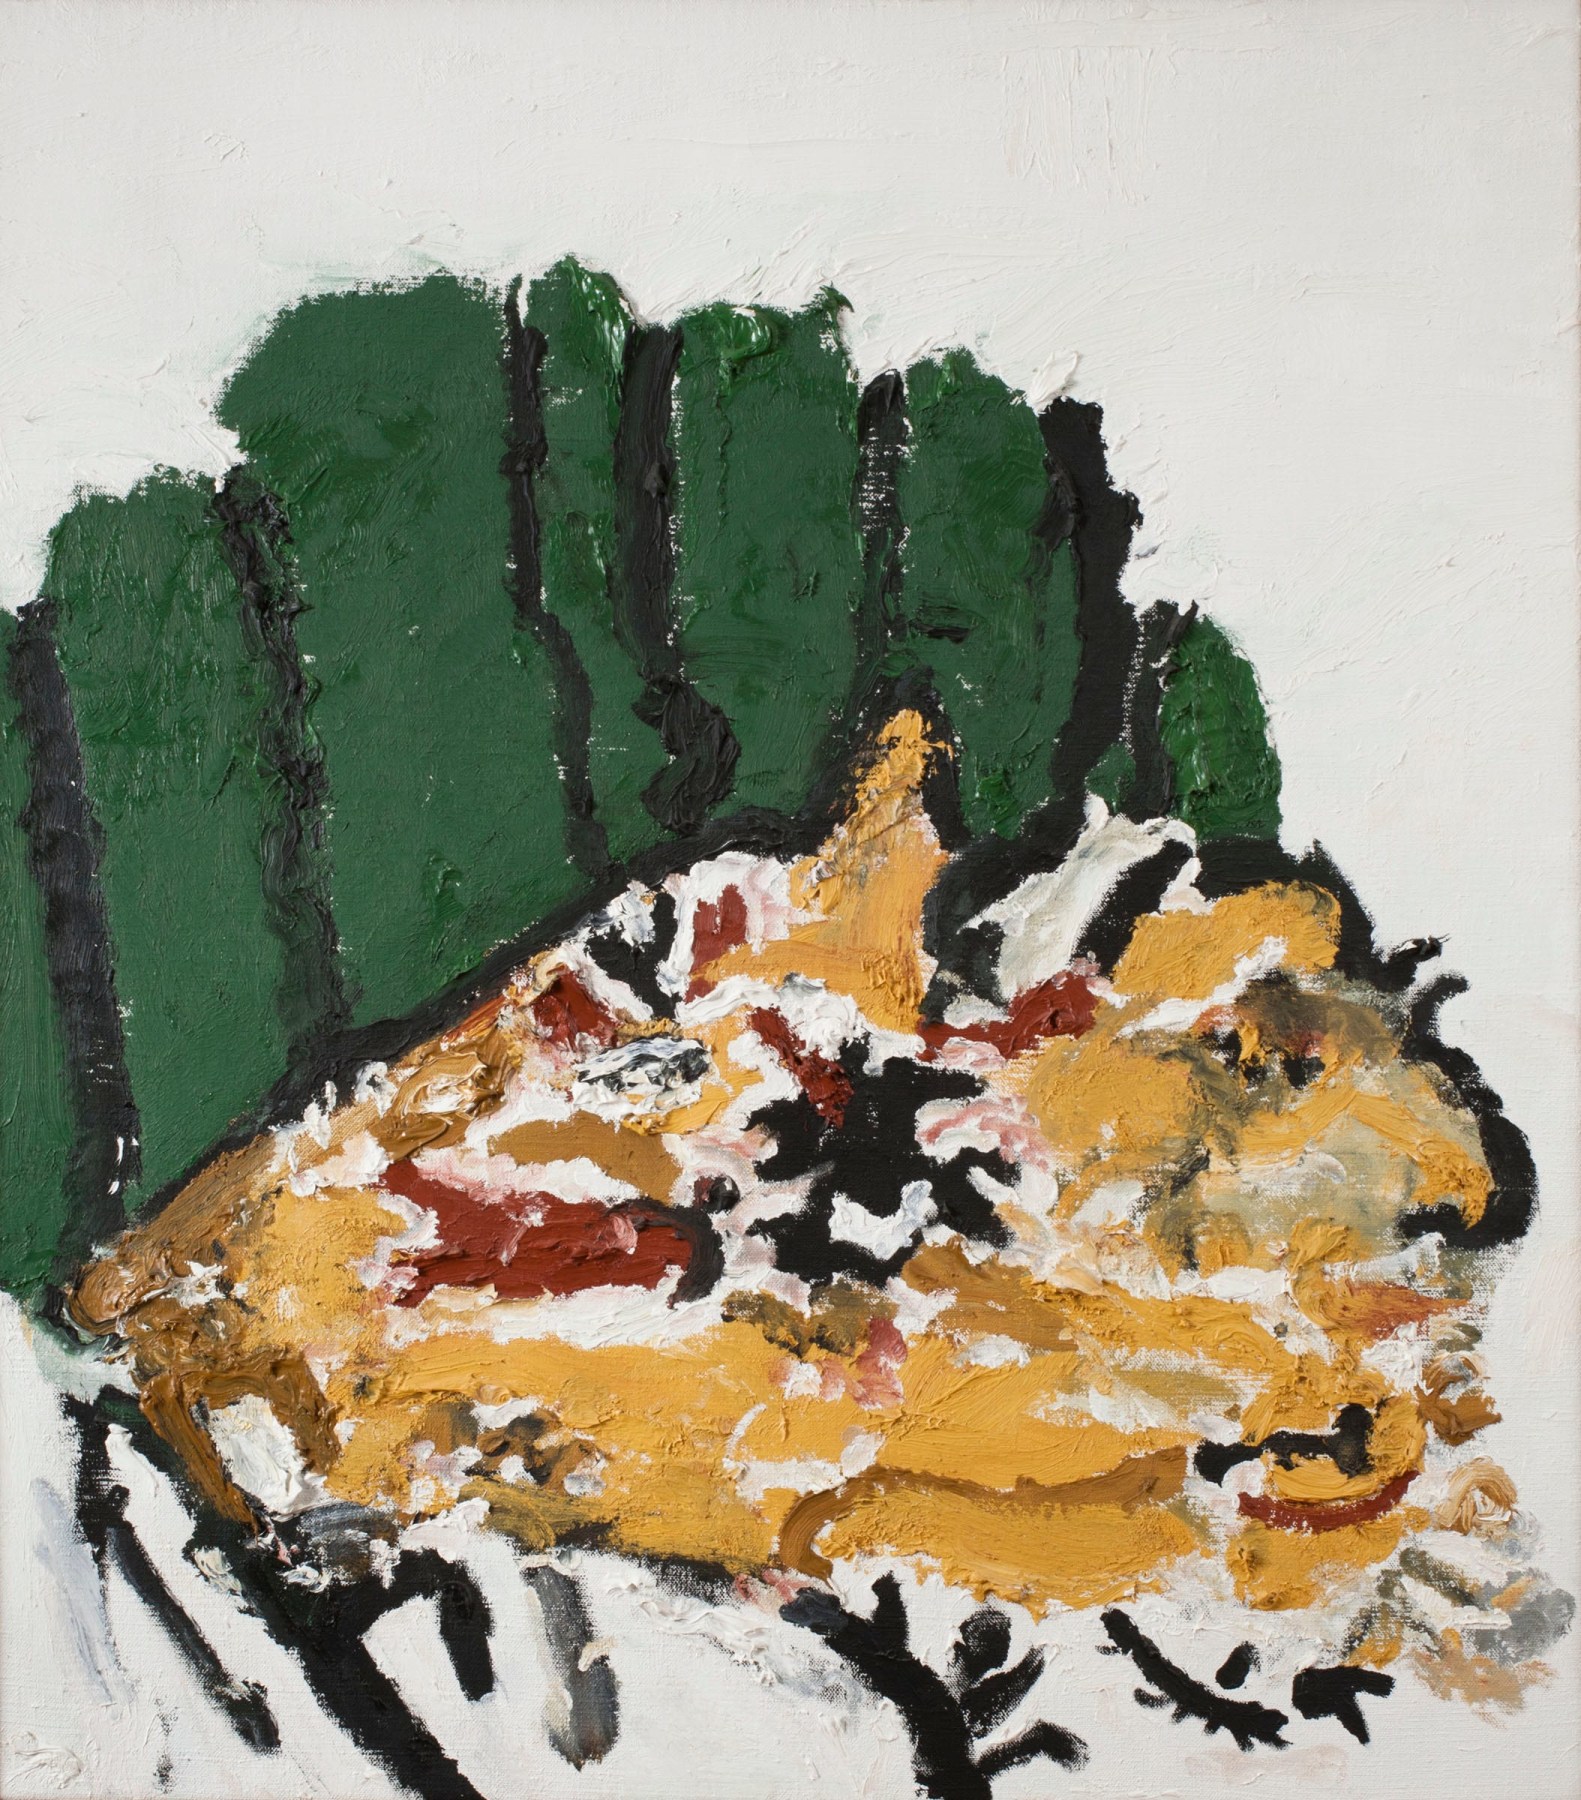 Don Van Vliet

&amp;ldquo;Wrought Iron Cactus&amp;rdquo;, 1991

Oil on canvas

37 x 32 1/2 inches

94 x 82.5 cm

VLI 127